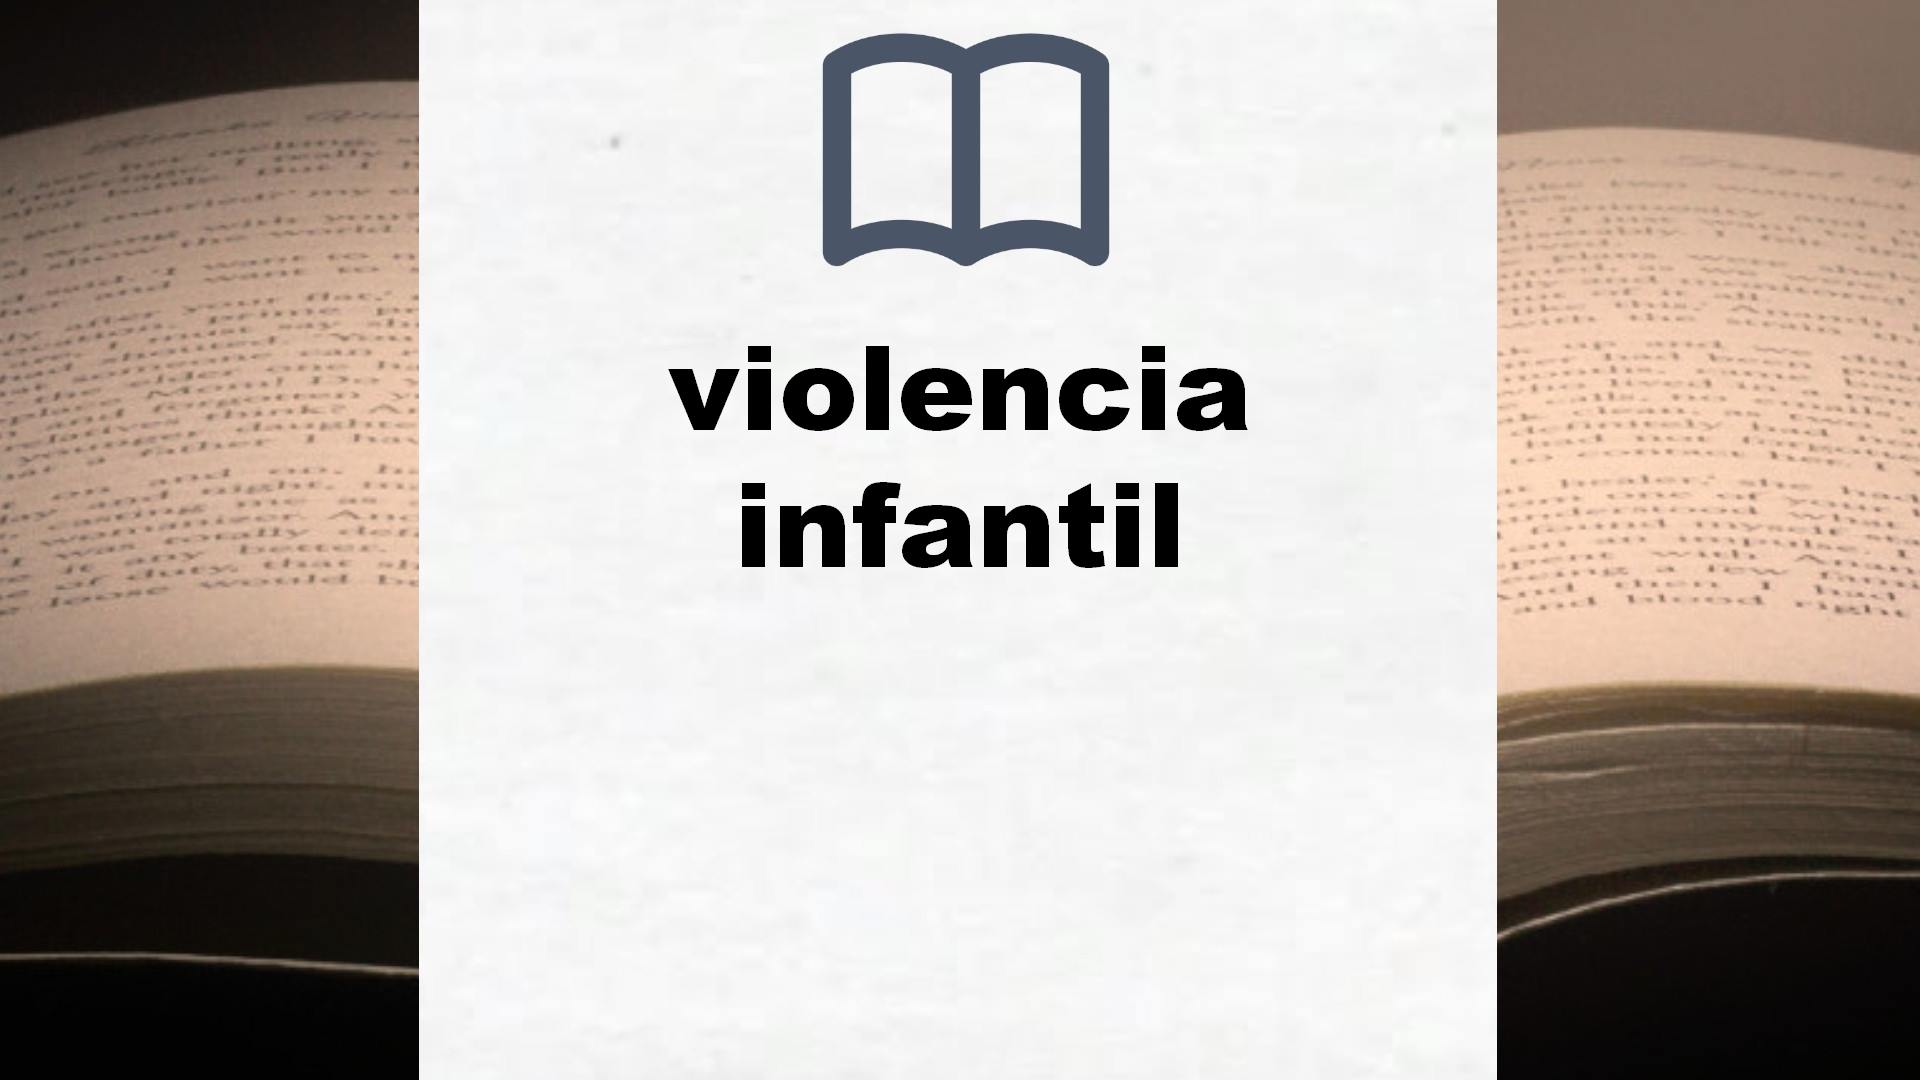 Libros sobre violencia infantil